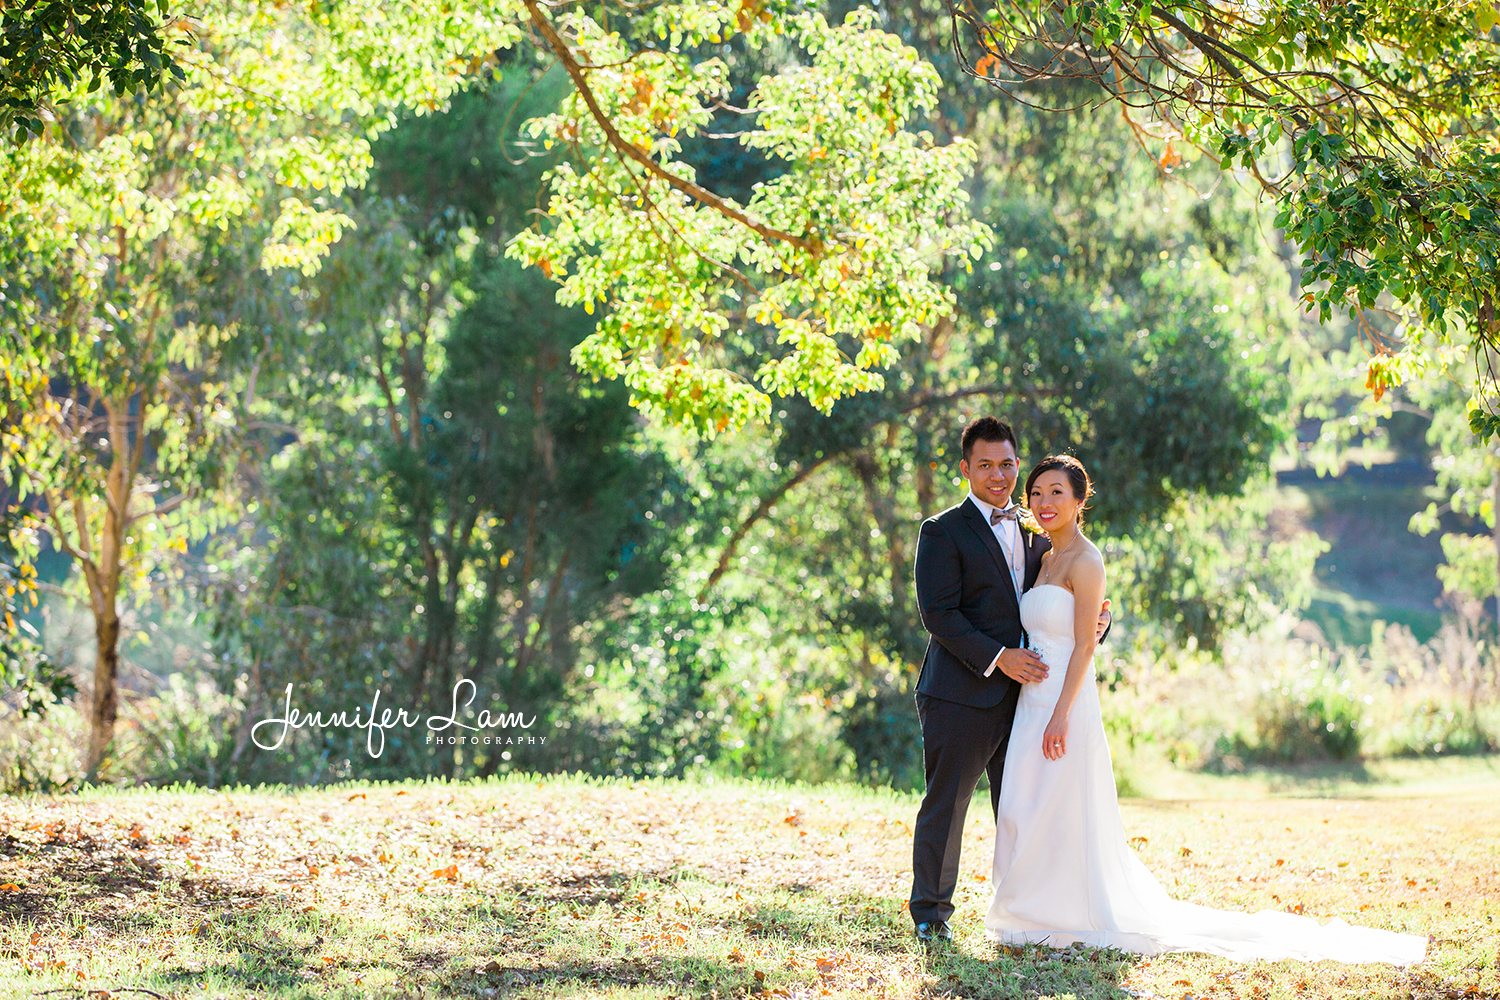 Sydney Wedding Photographer - Jennifer Lam Photography (78).jpg